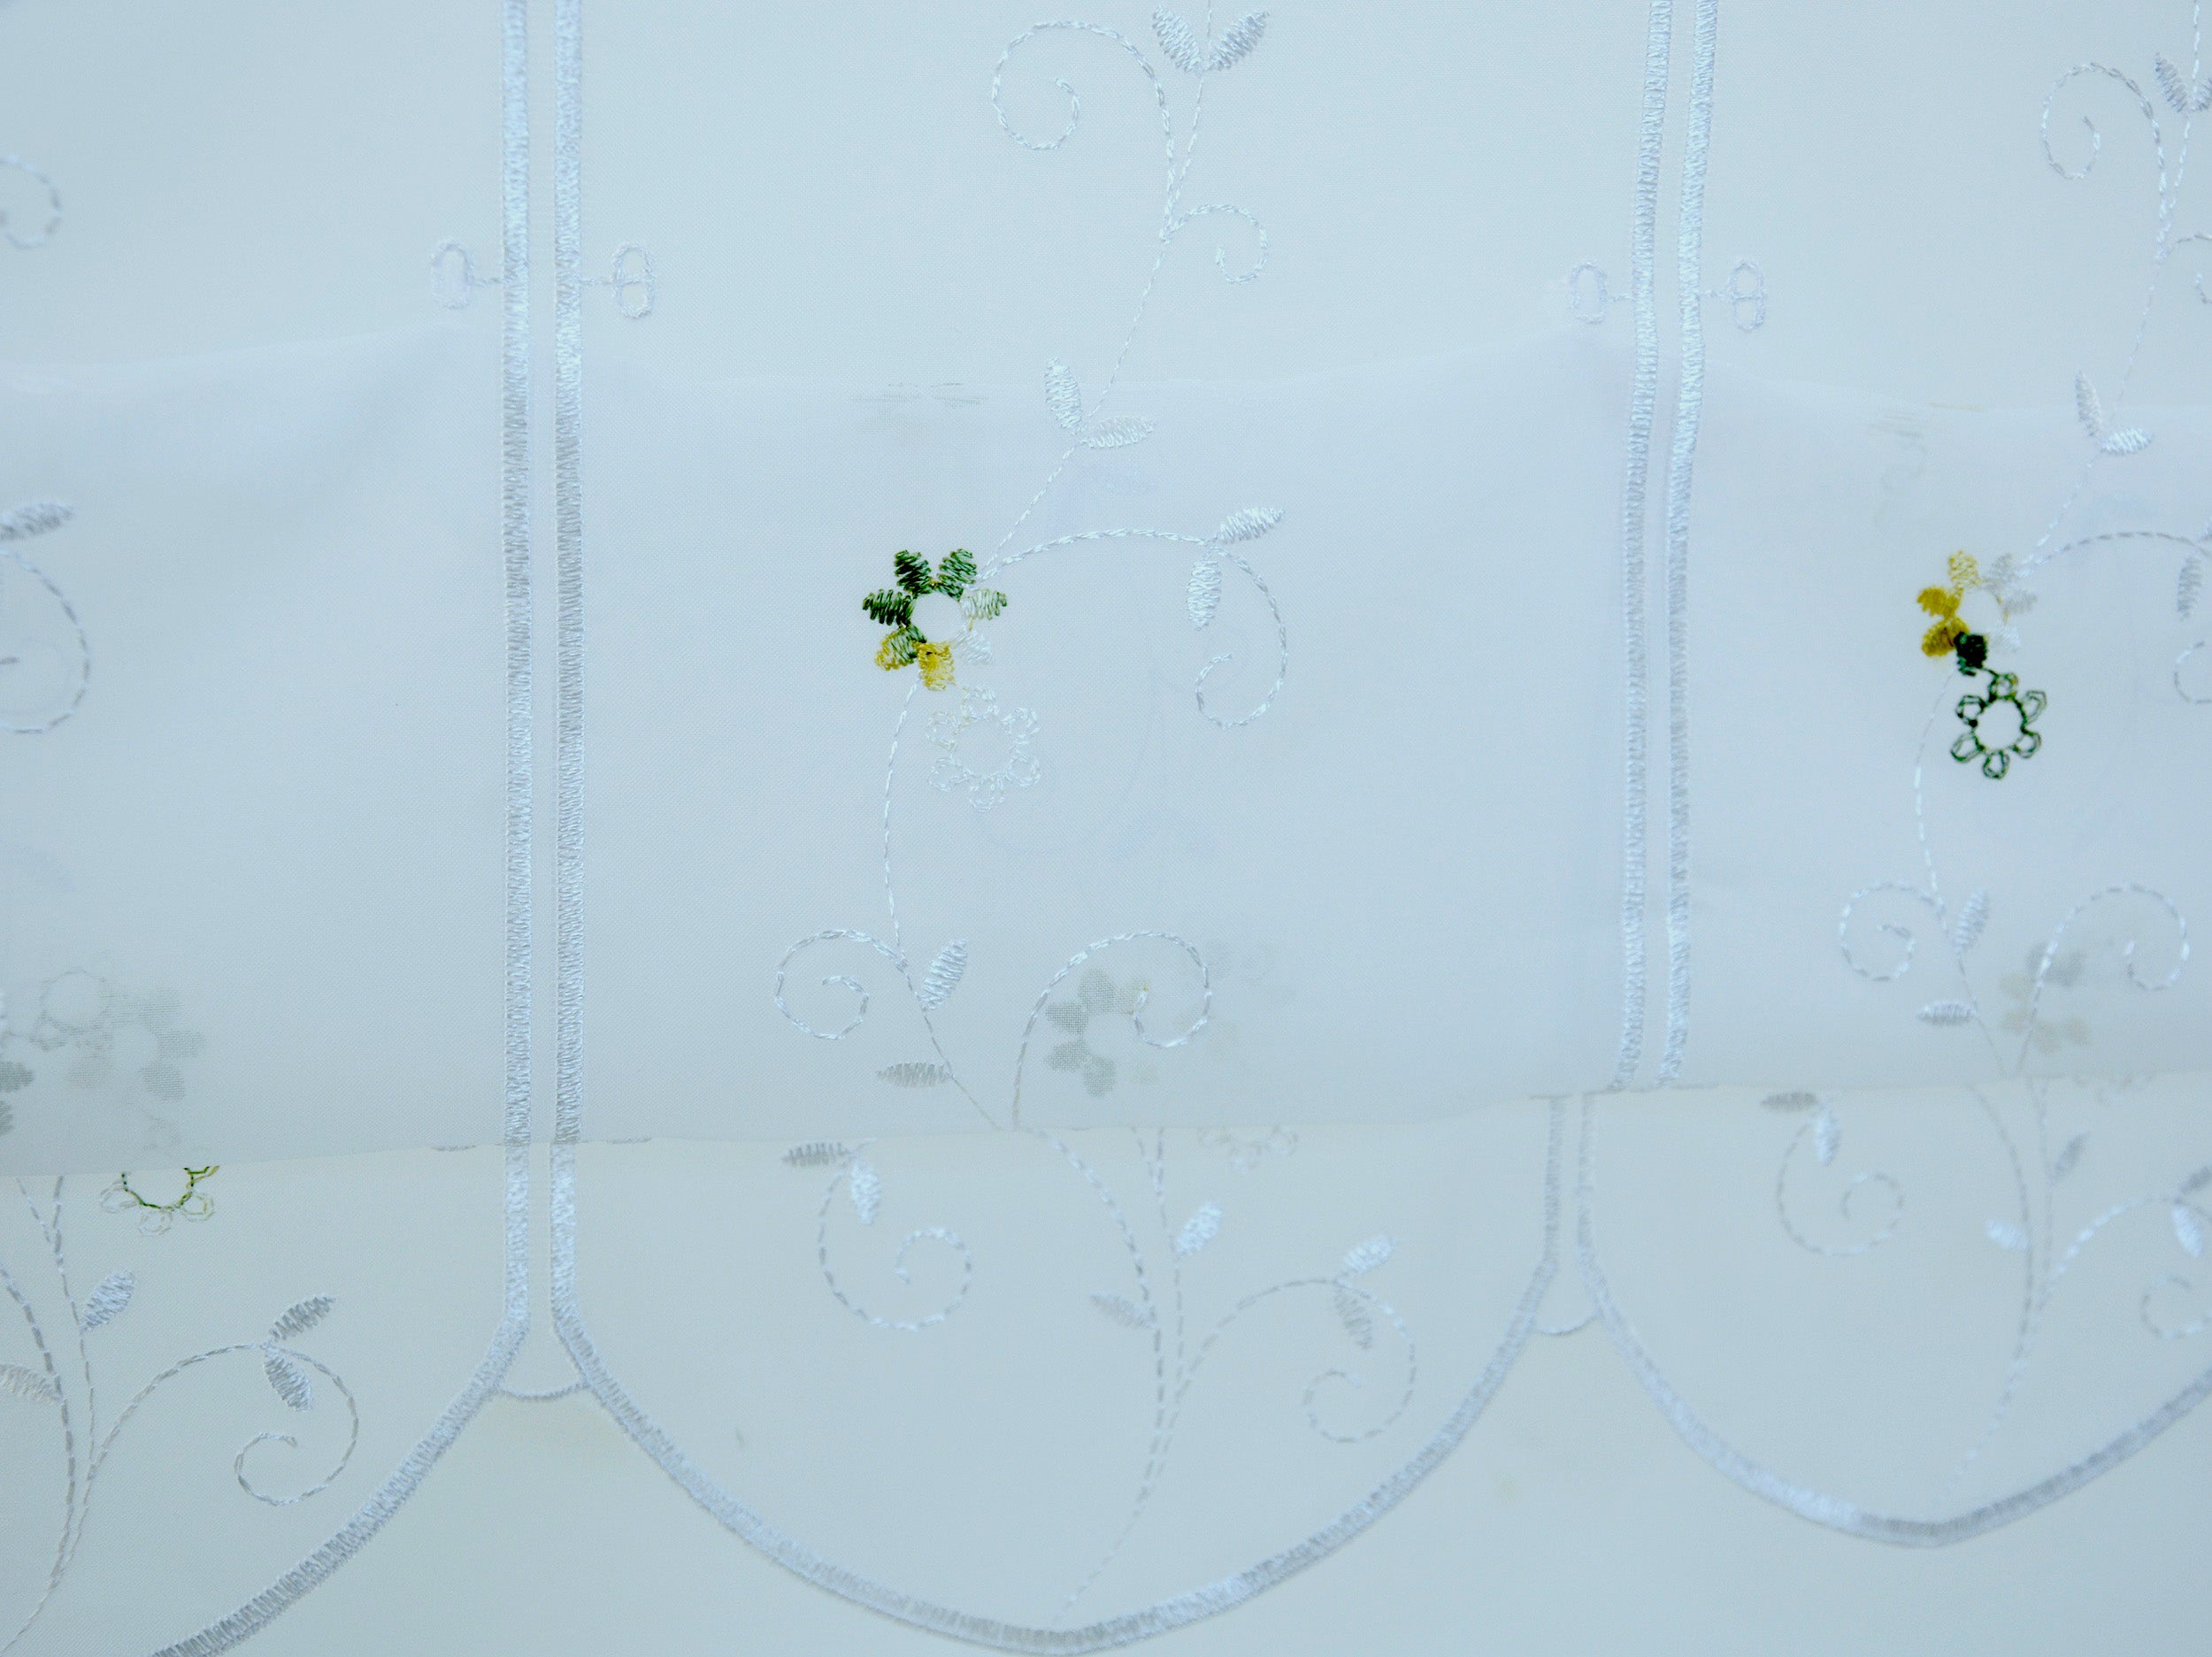 Cliprollo Blume grün / weiß bestickt Höhe 145cm nach Maß